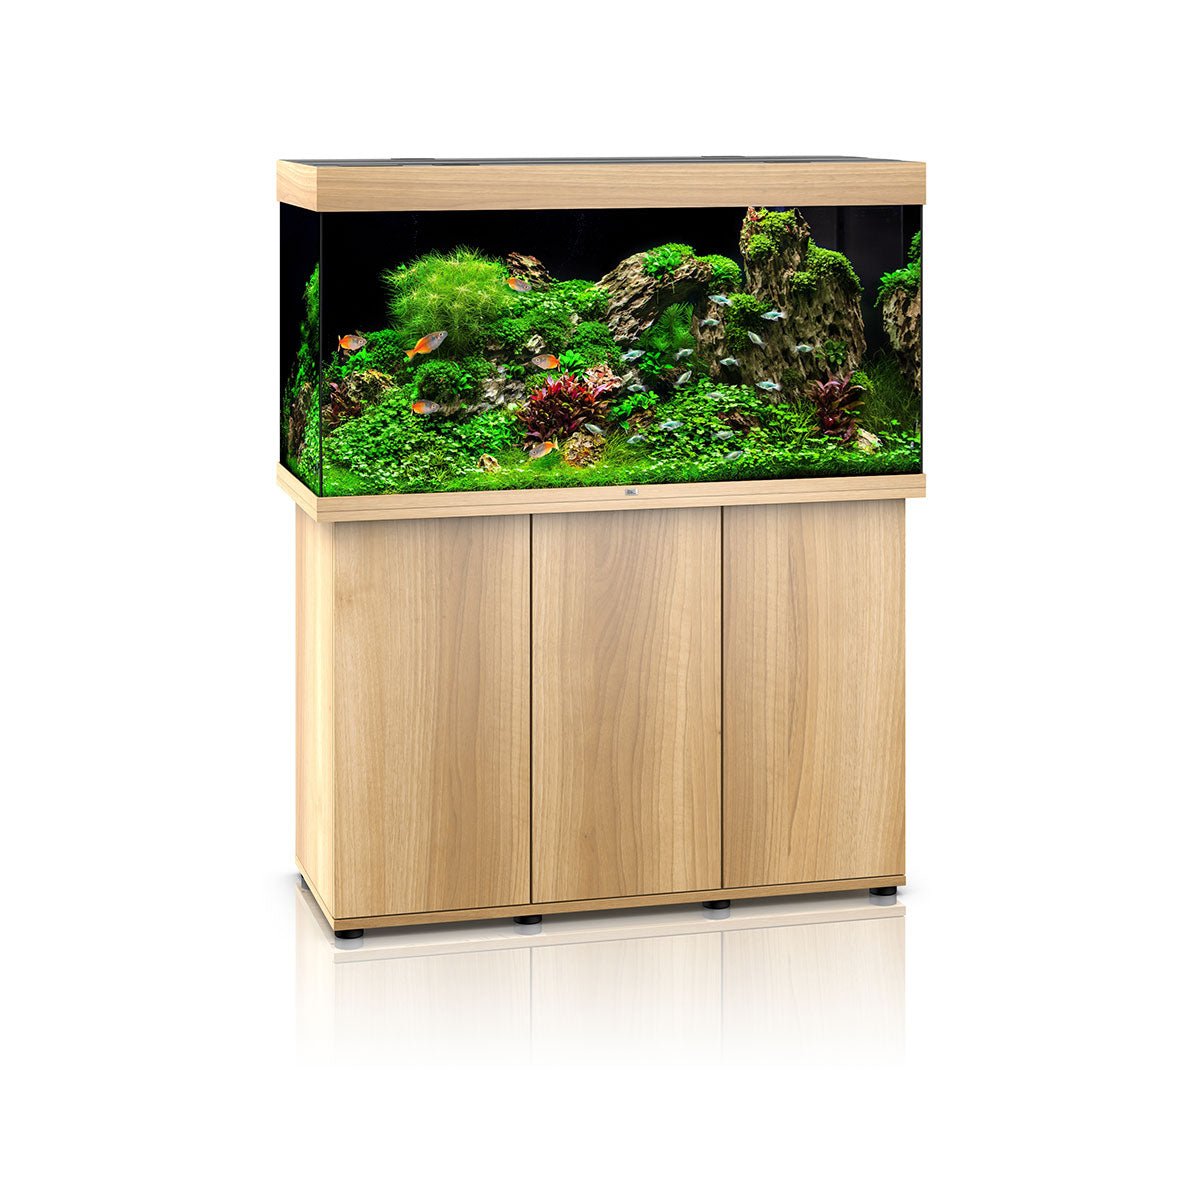 Juwel Rio 350 LED Aquarium and Cabinet (Light Wood) - Charterhouse Aquatics